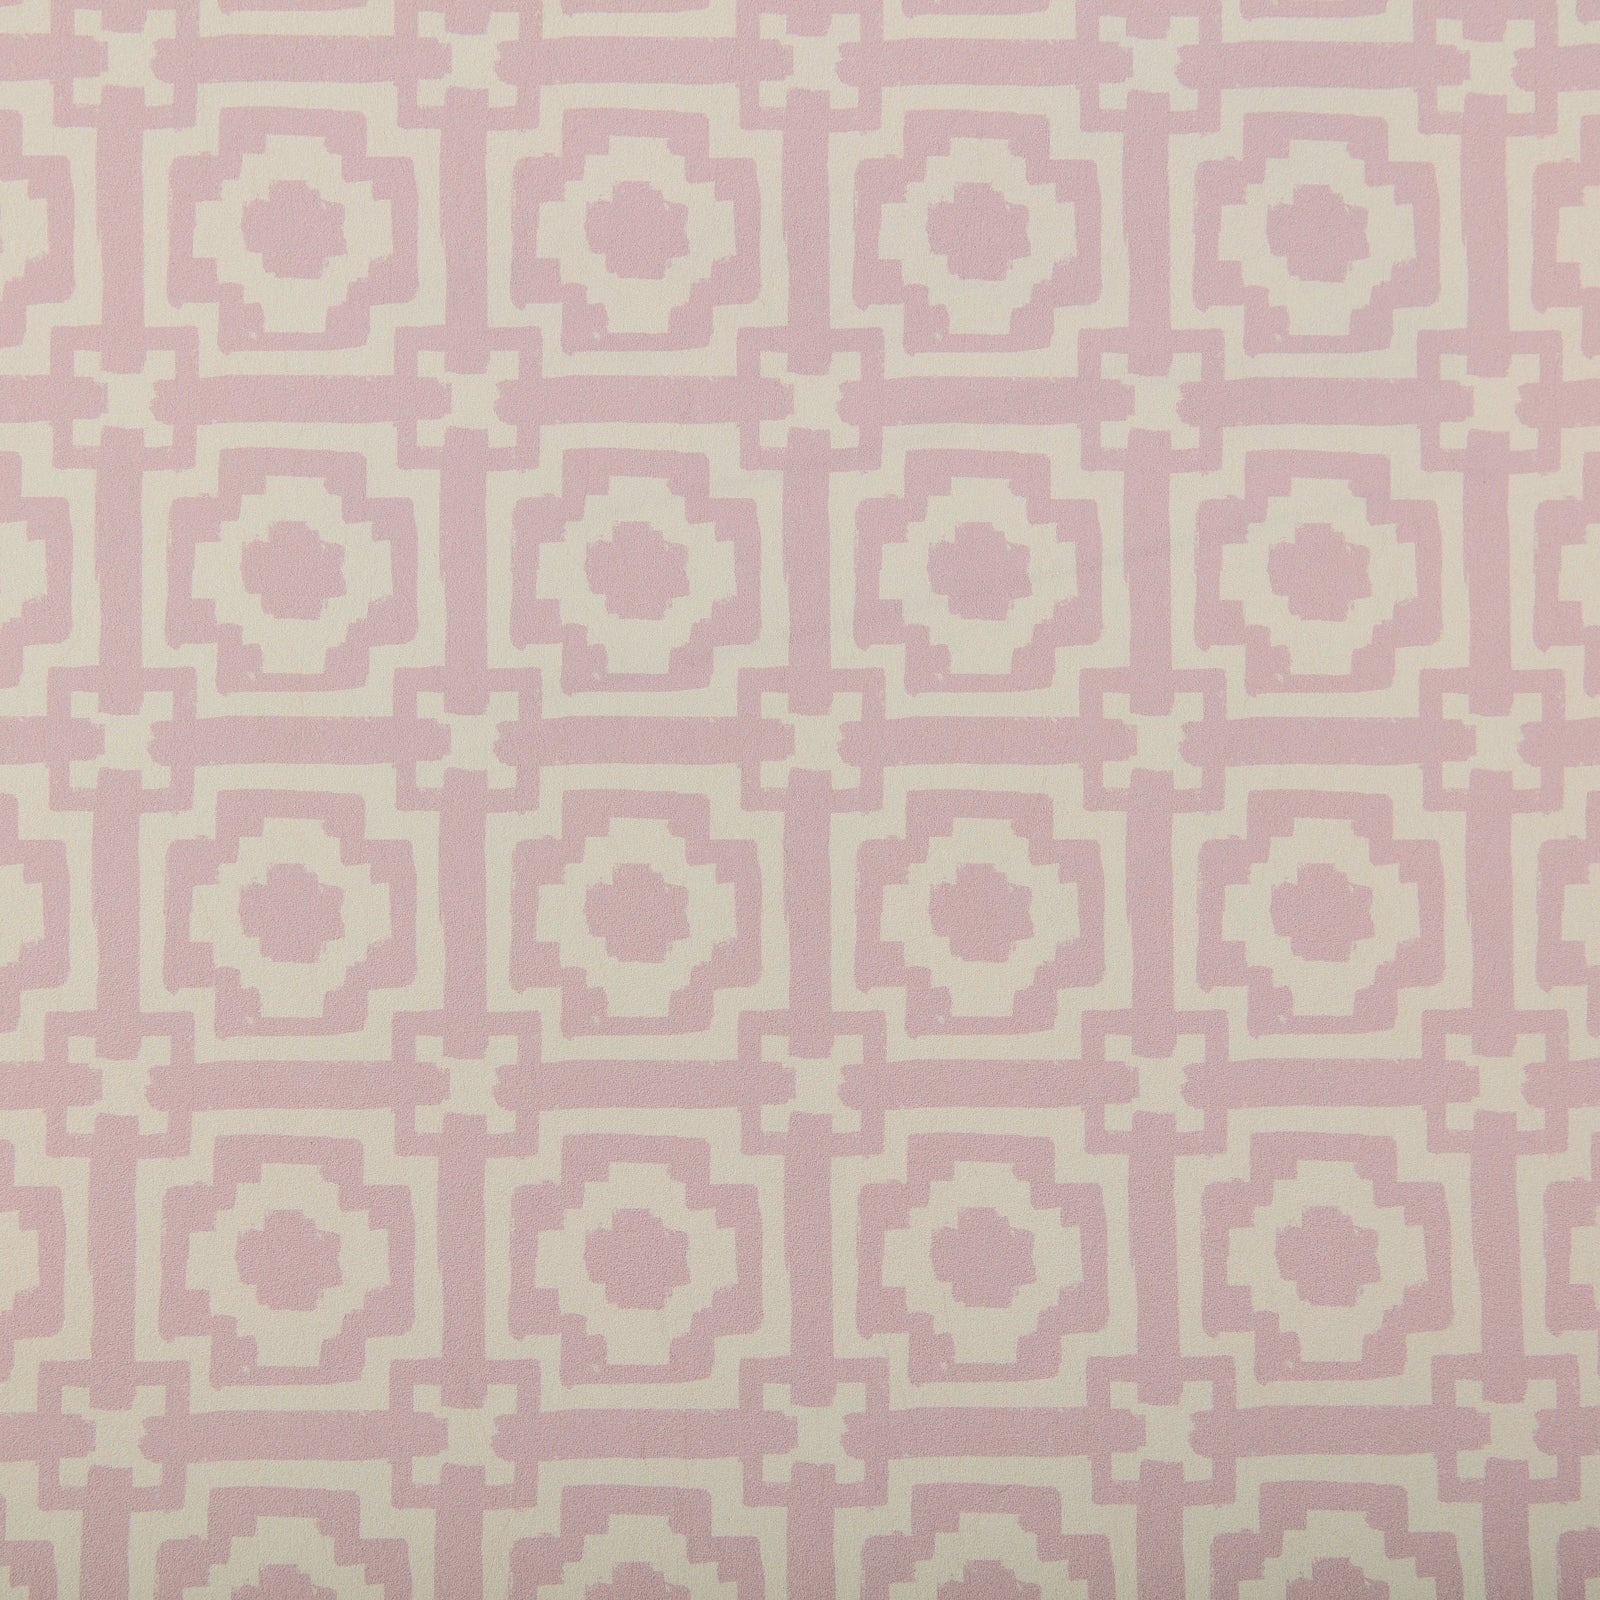 Alotablots Wallpaper in Blush